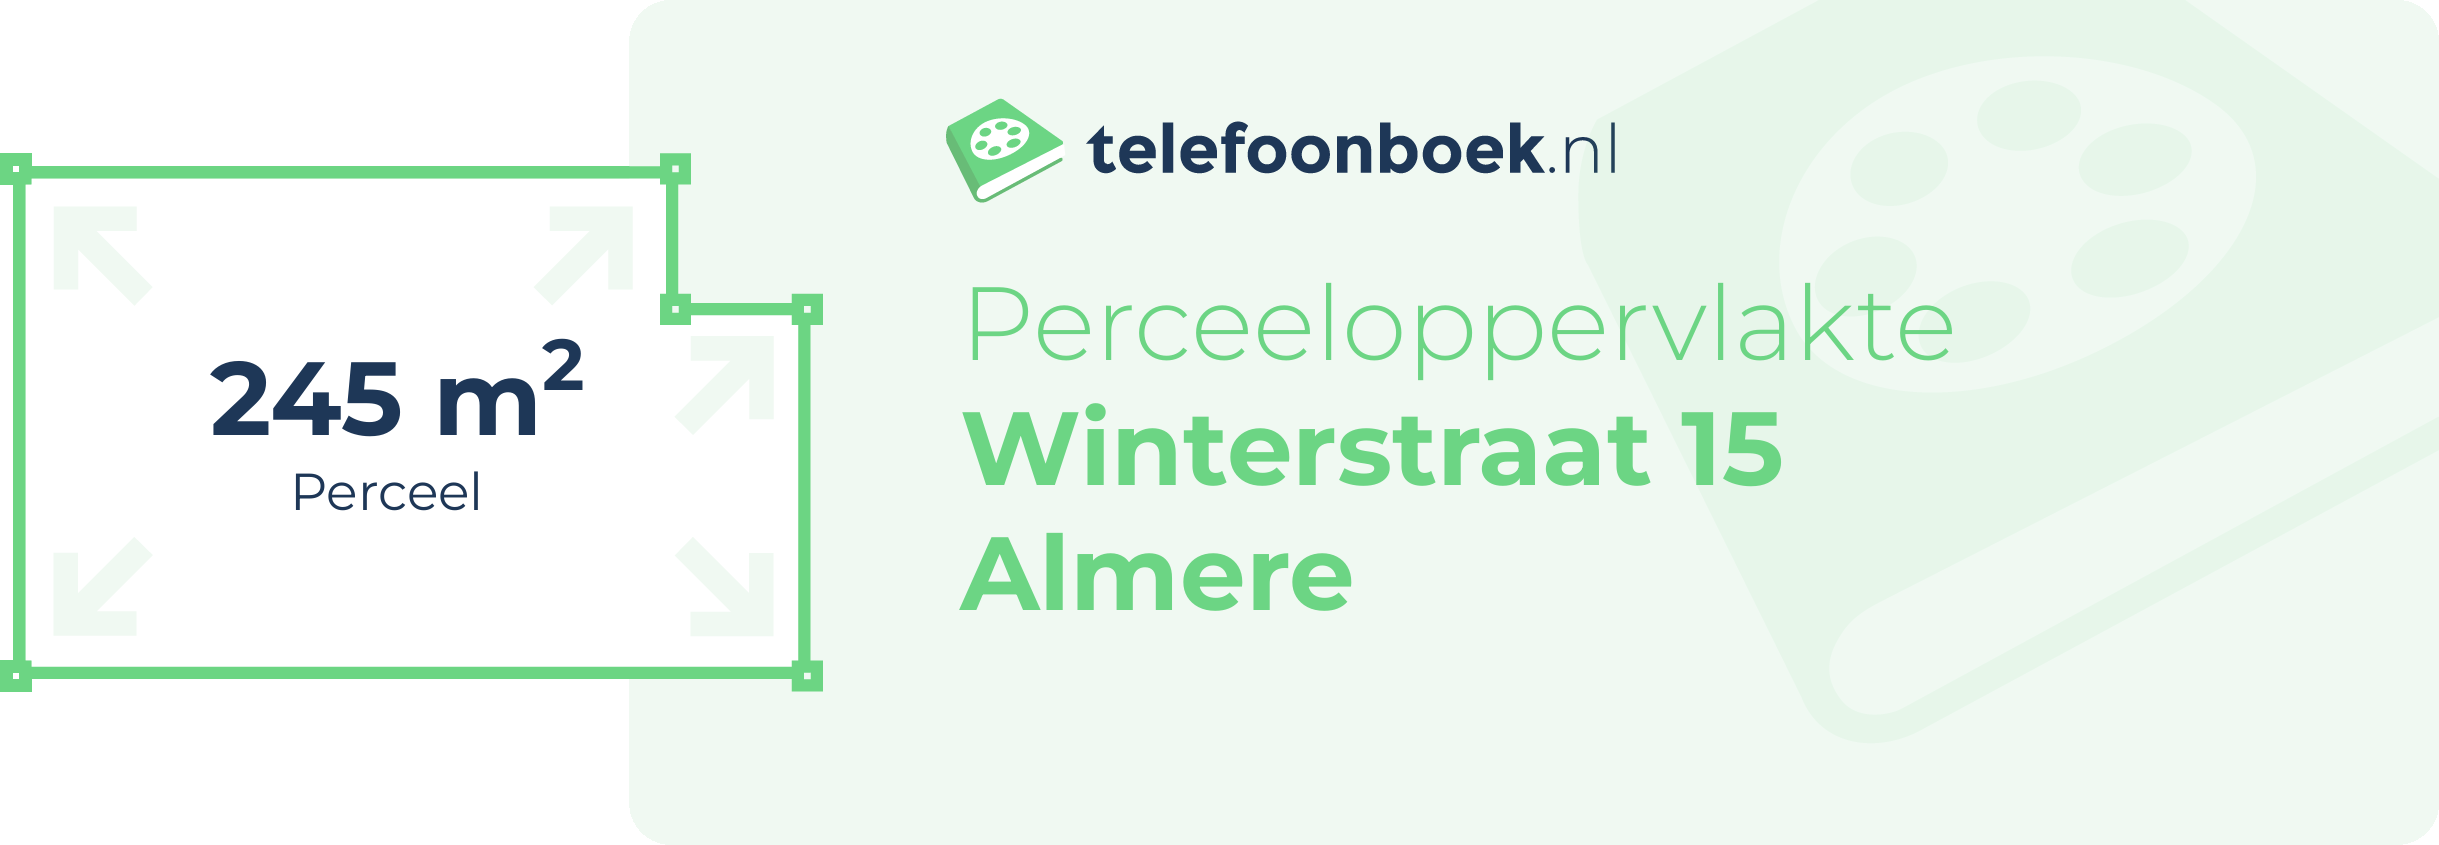 Perceeloppervlakte Winterstraat 15 Almere